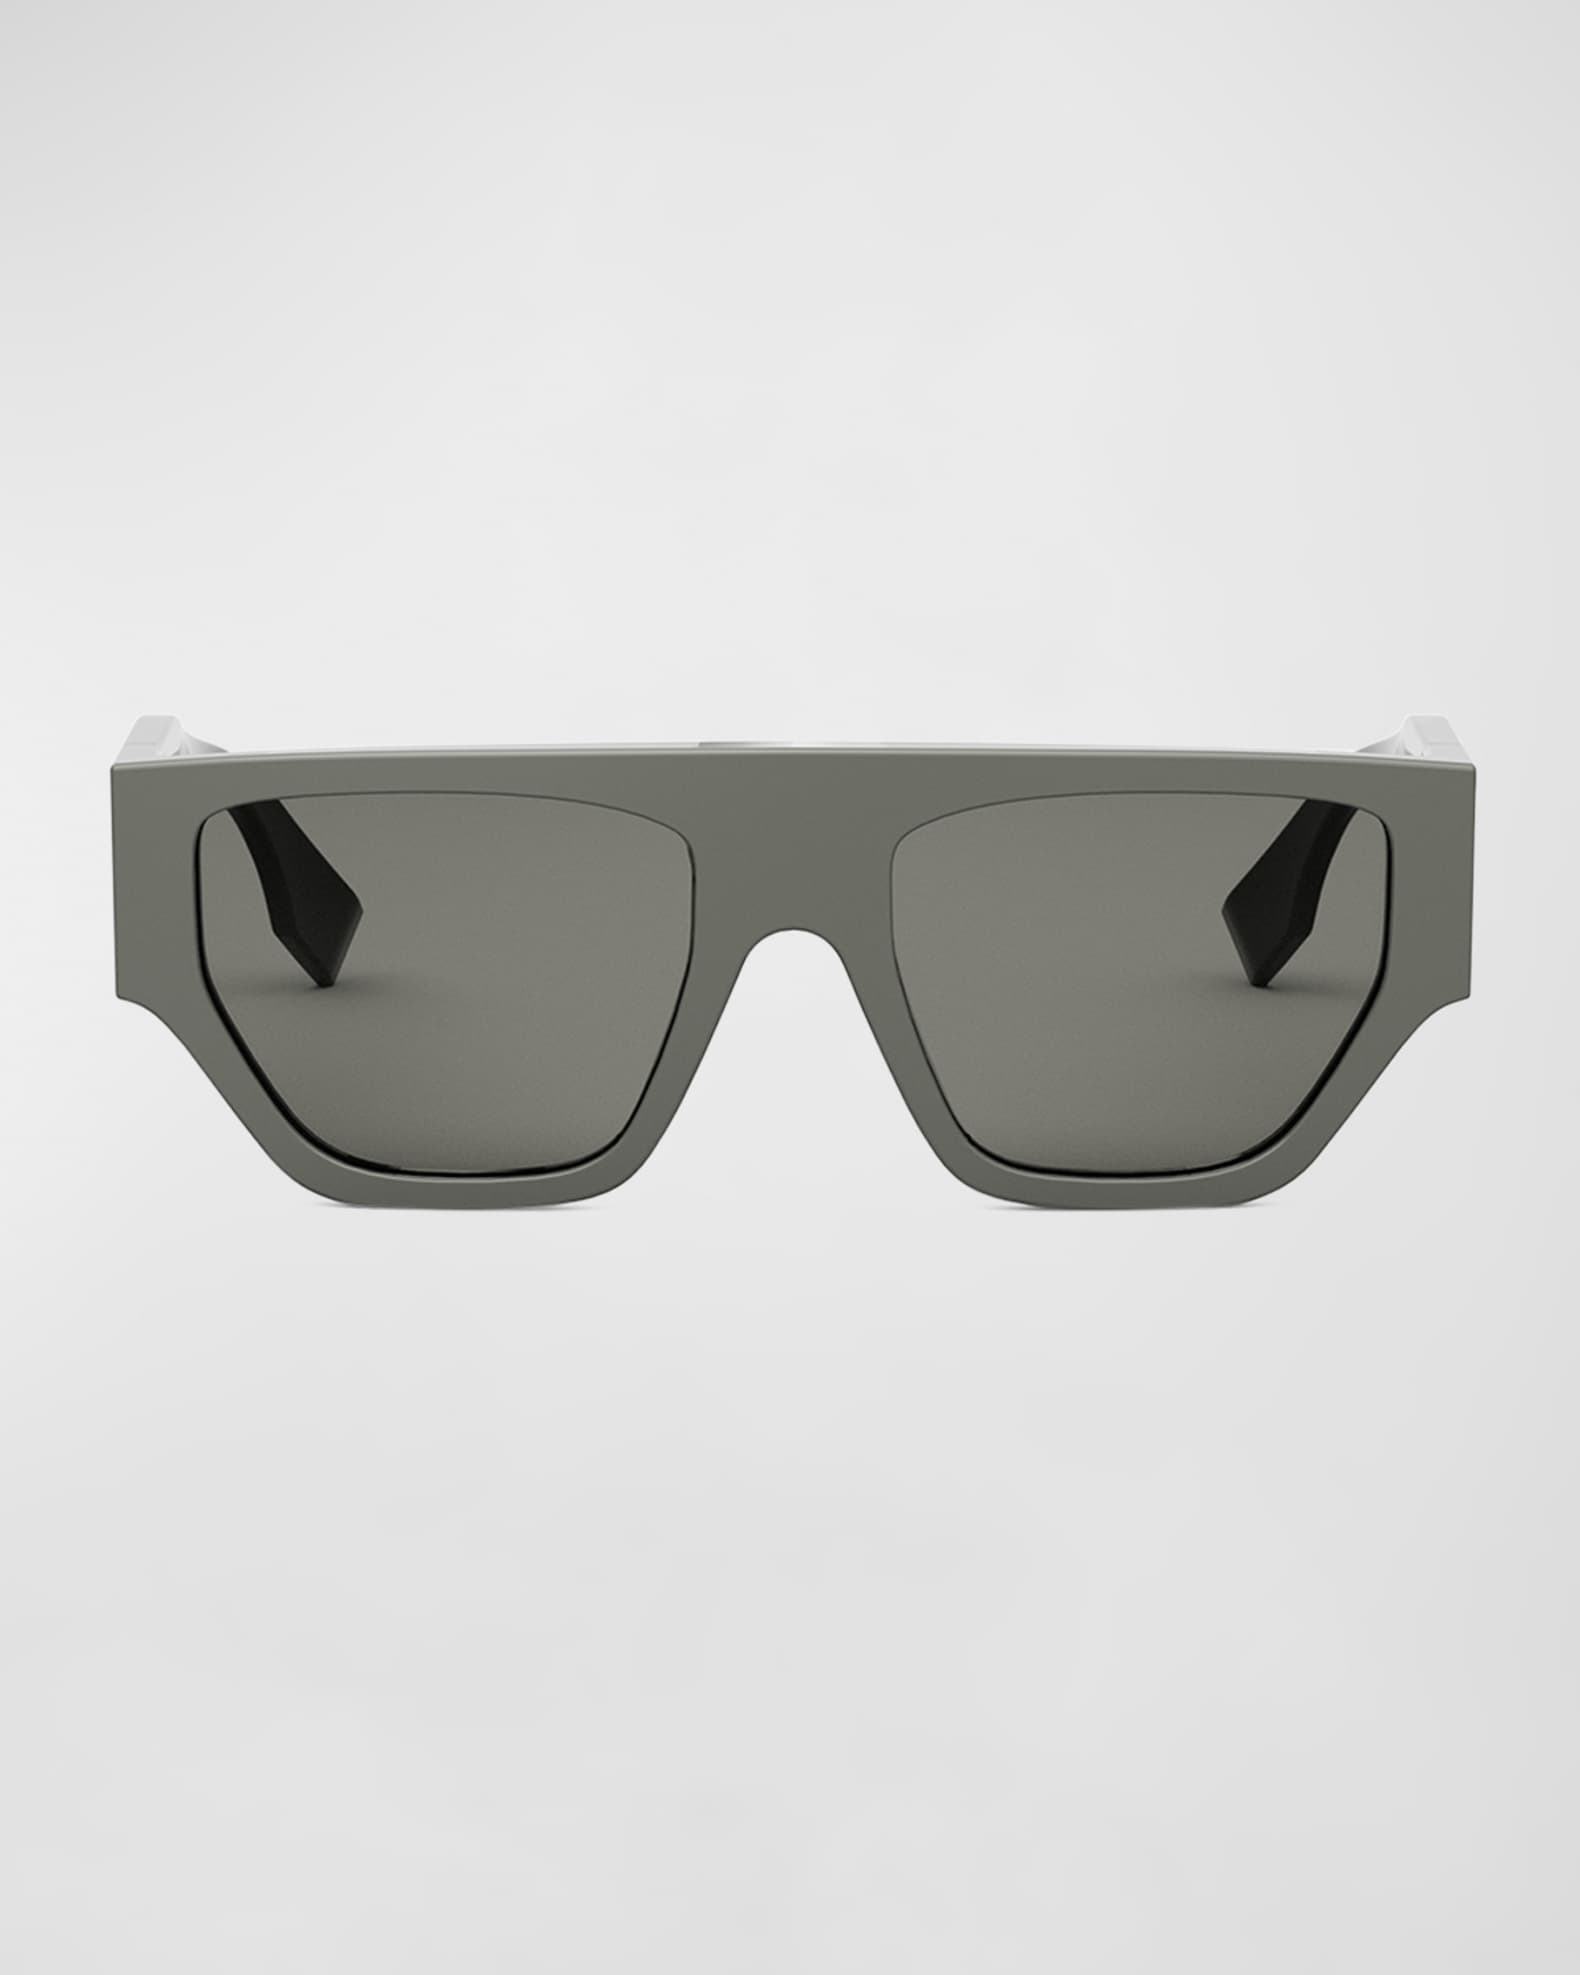 Fendi - O'Lock - Rectangular Sunglasses - Black - Sunglasses - Fendi Eyewear  - Avvenice